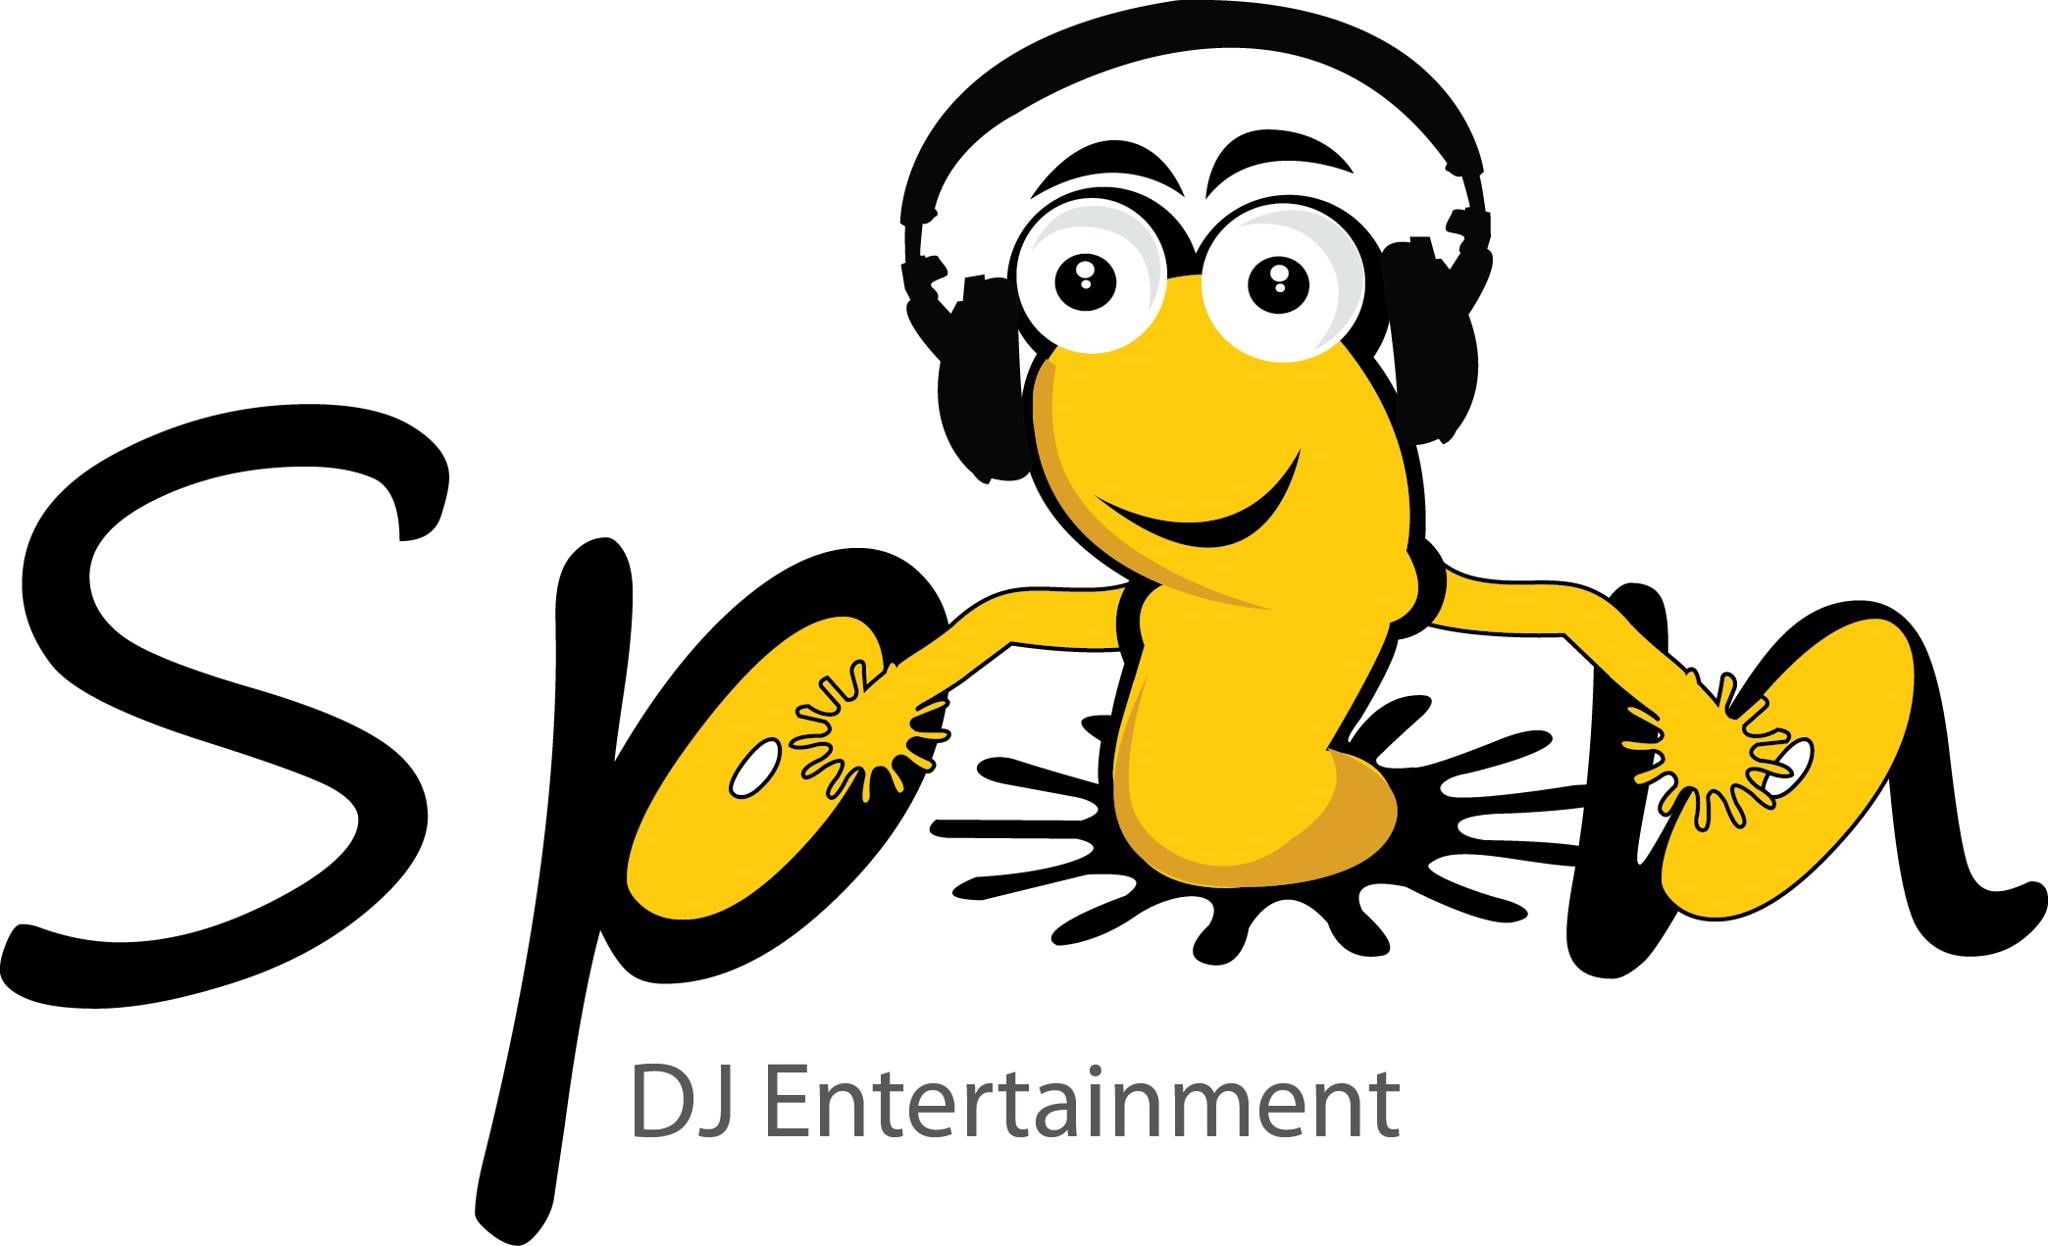 SPiN DJ Entertainment by Meek Industries, LLC